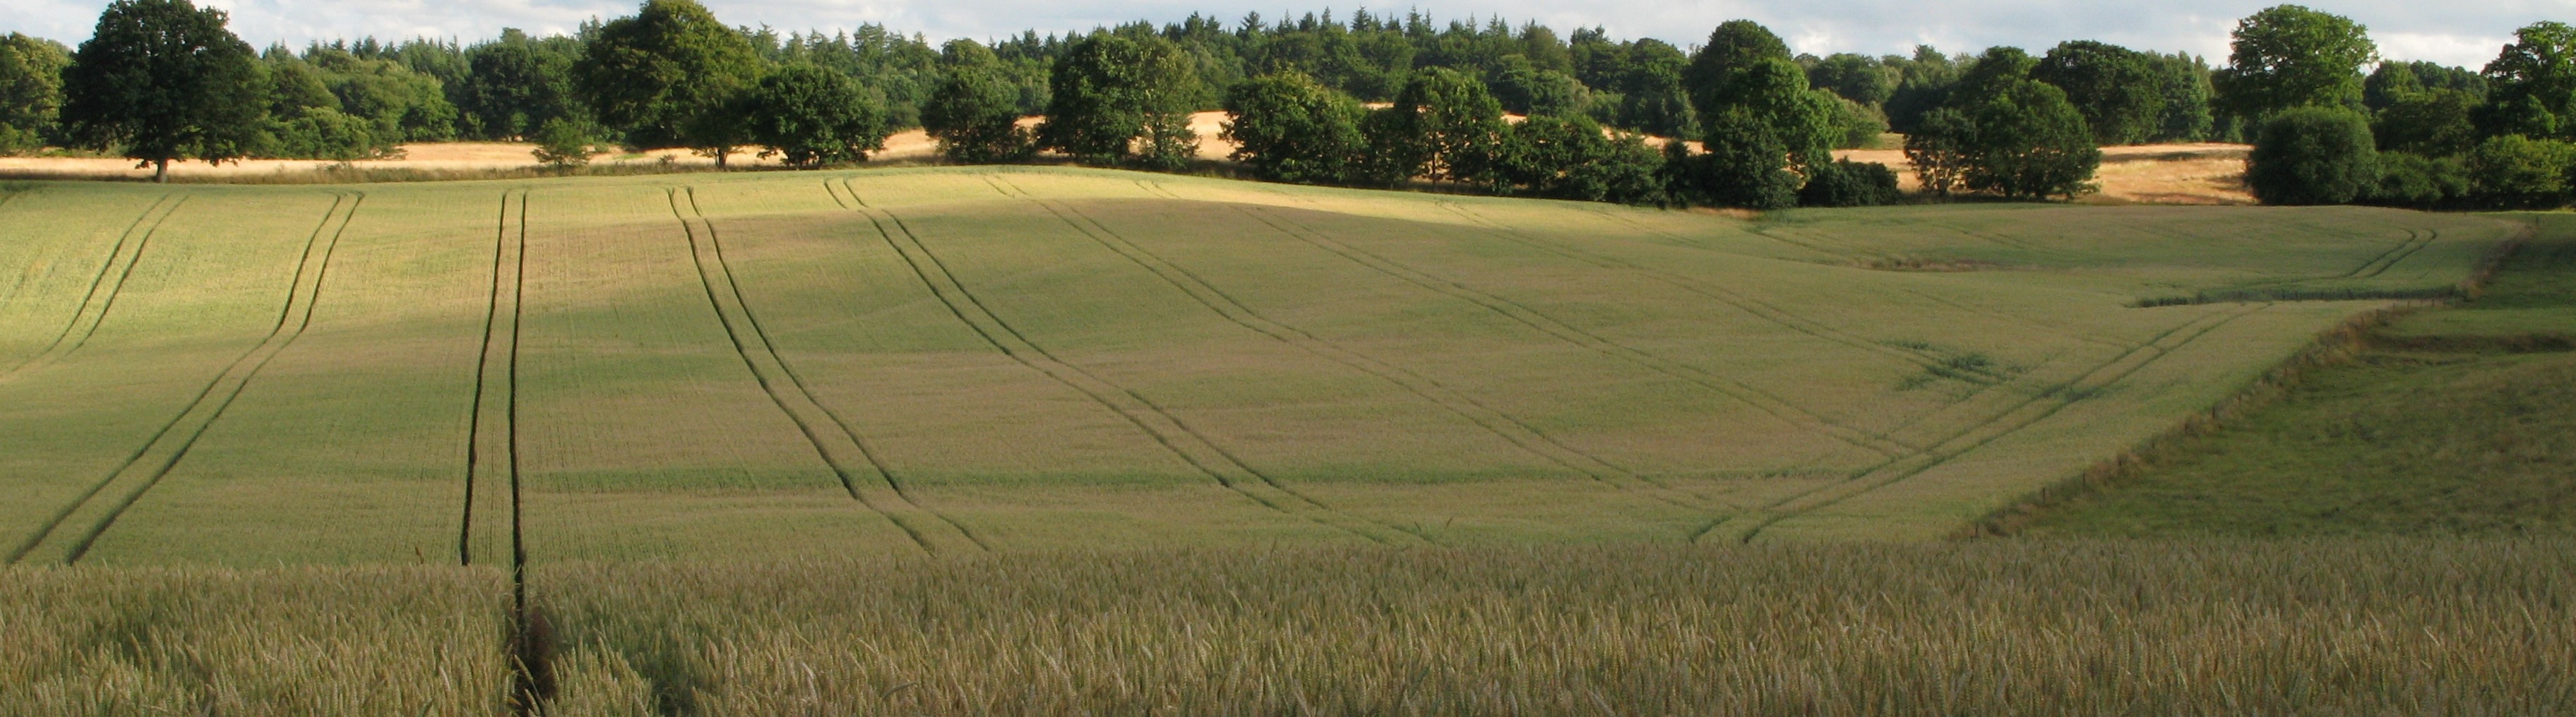 marker_tydelige_traktorspor.jpg